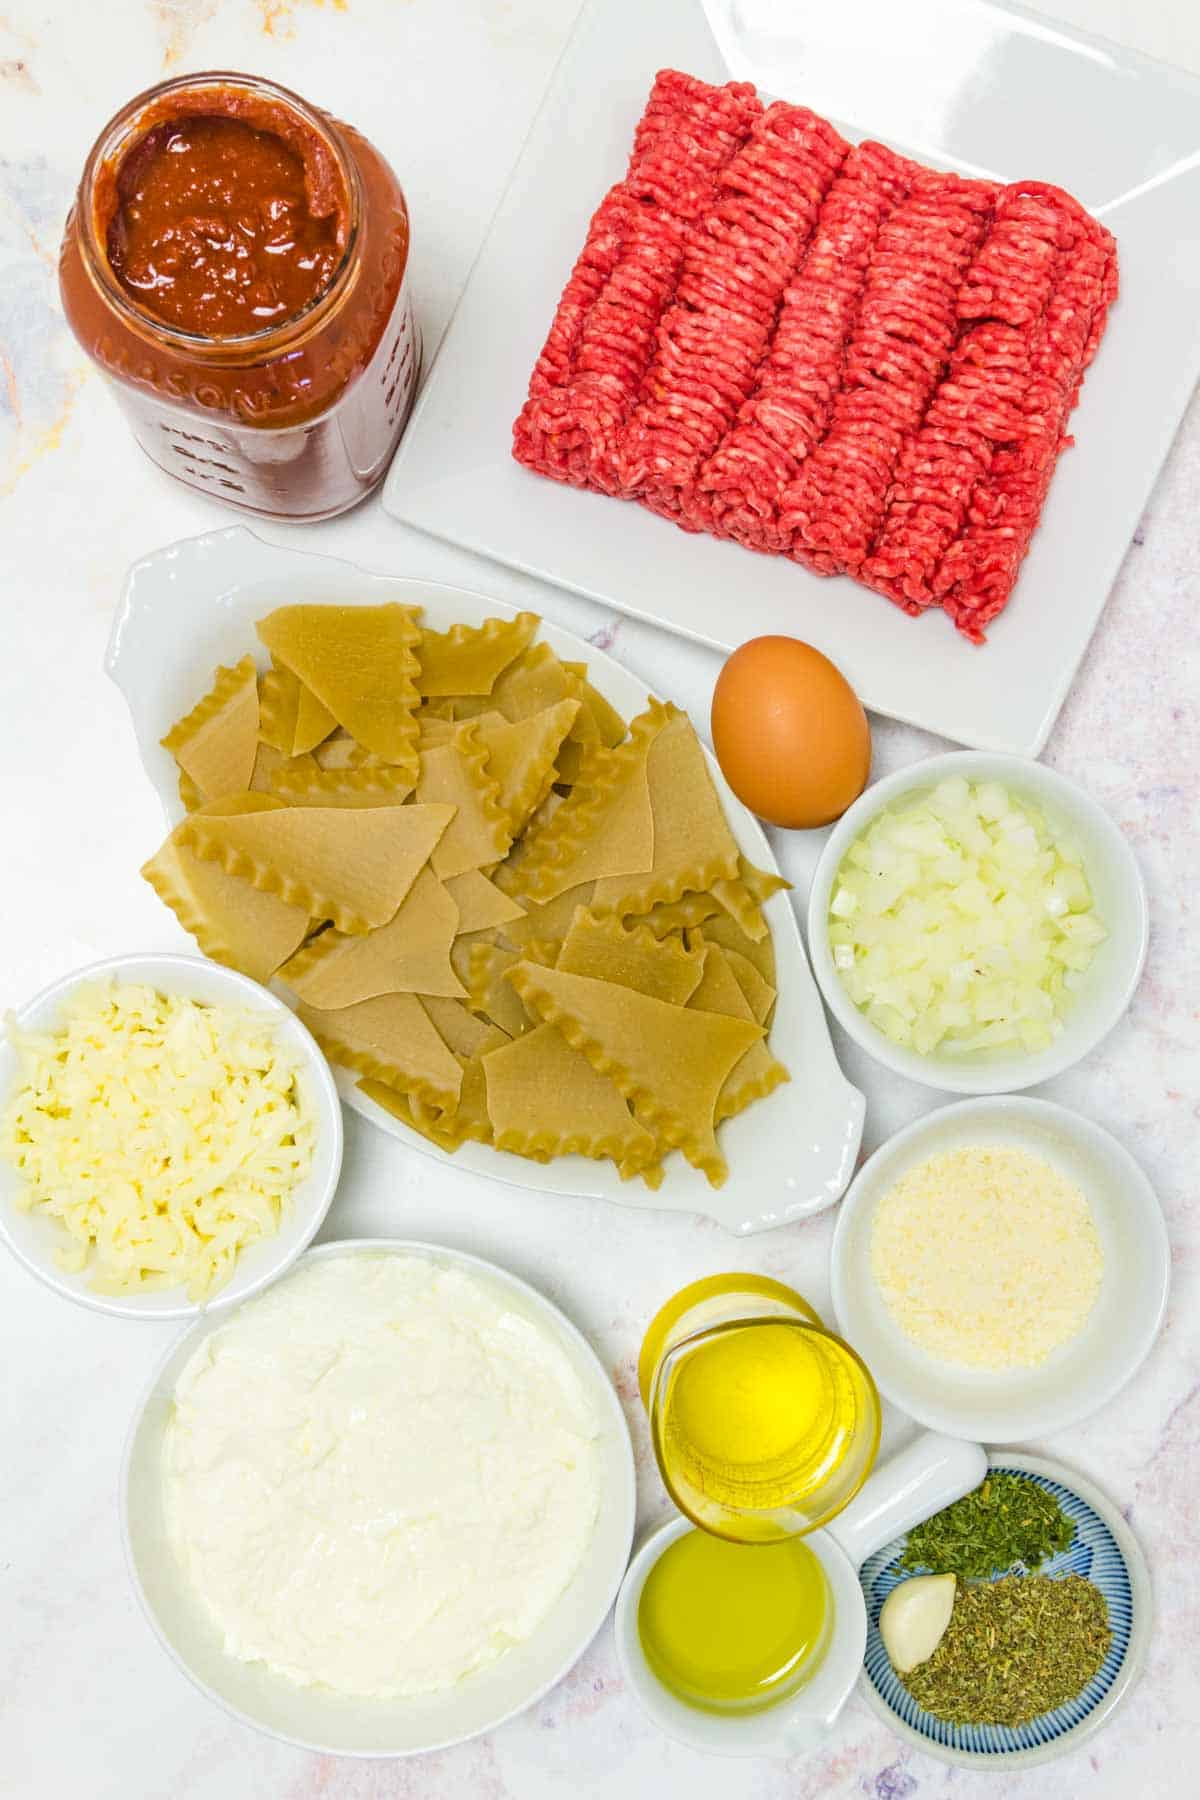 The ingredients for gluten-free skillet lasagna.